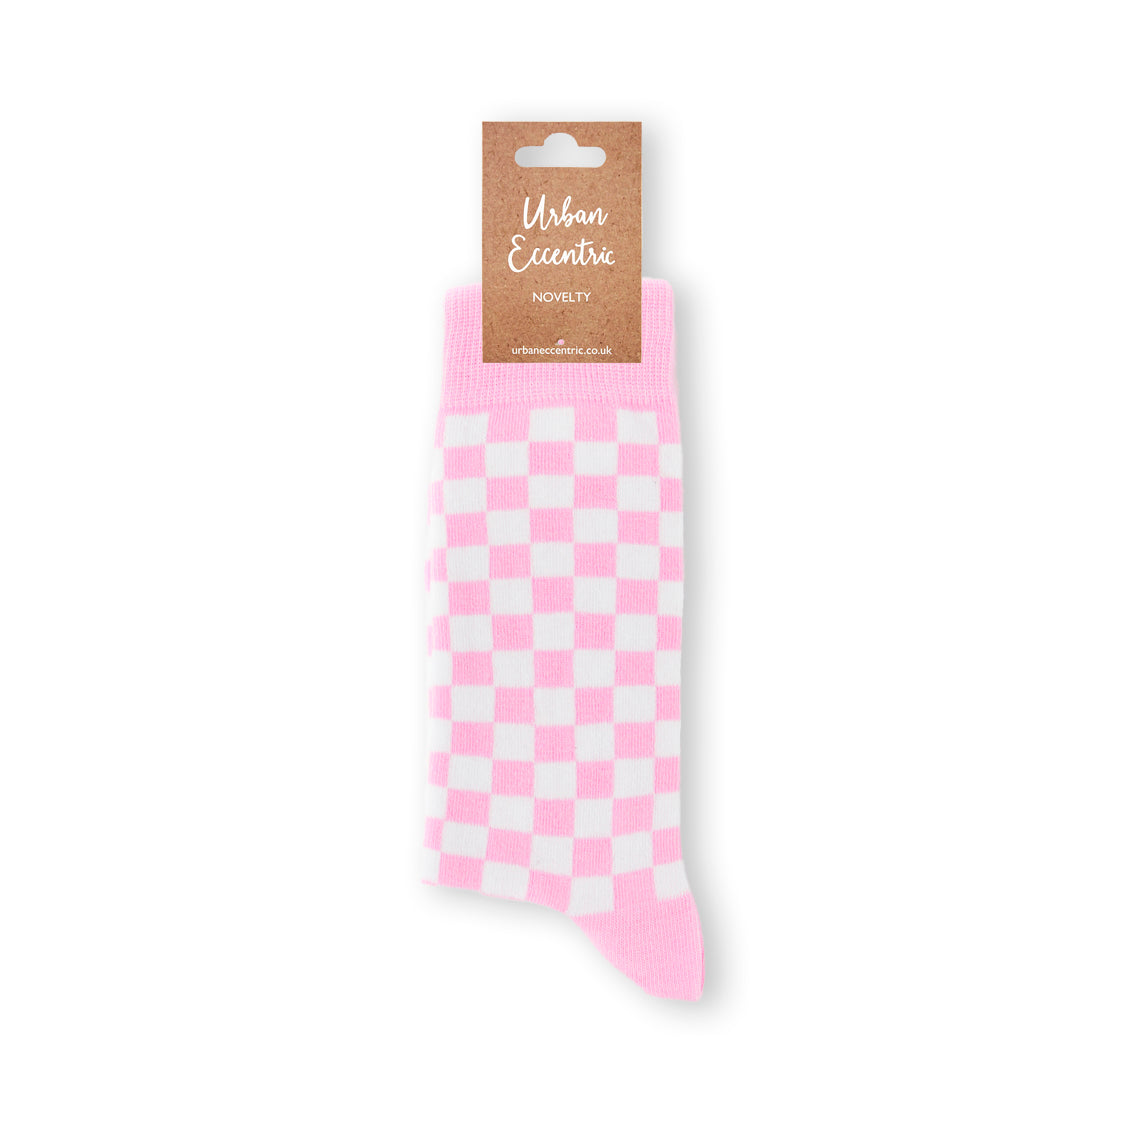 Unisex Pink Check Socks